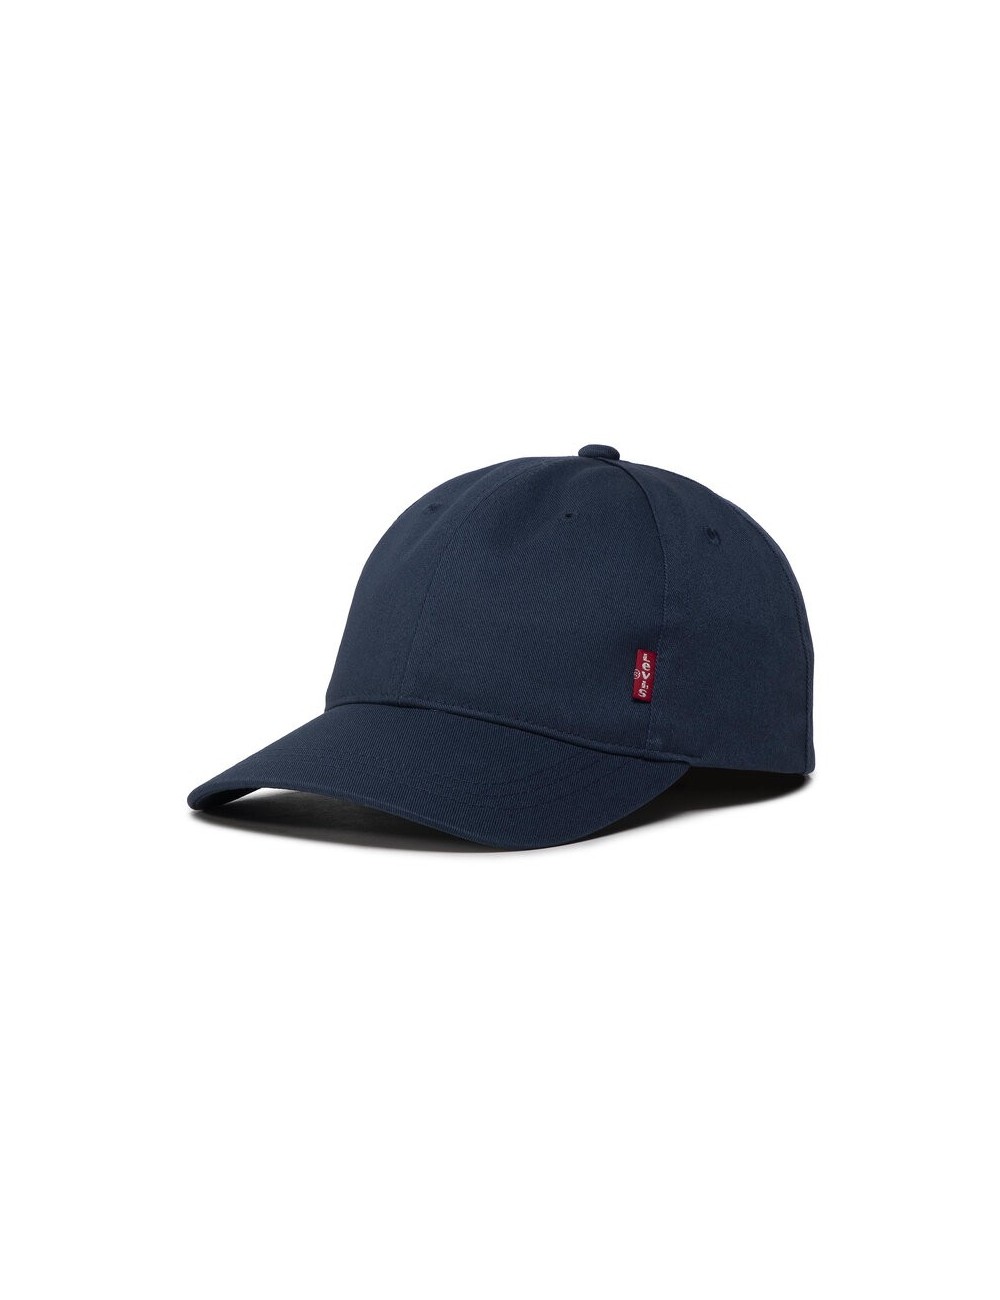 levis classic twill red tab baseball cap navy blue